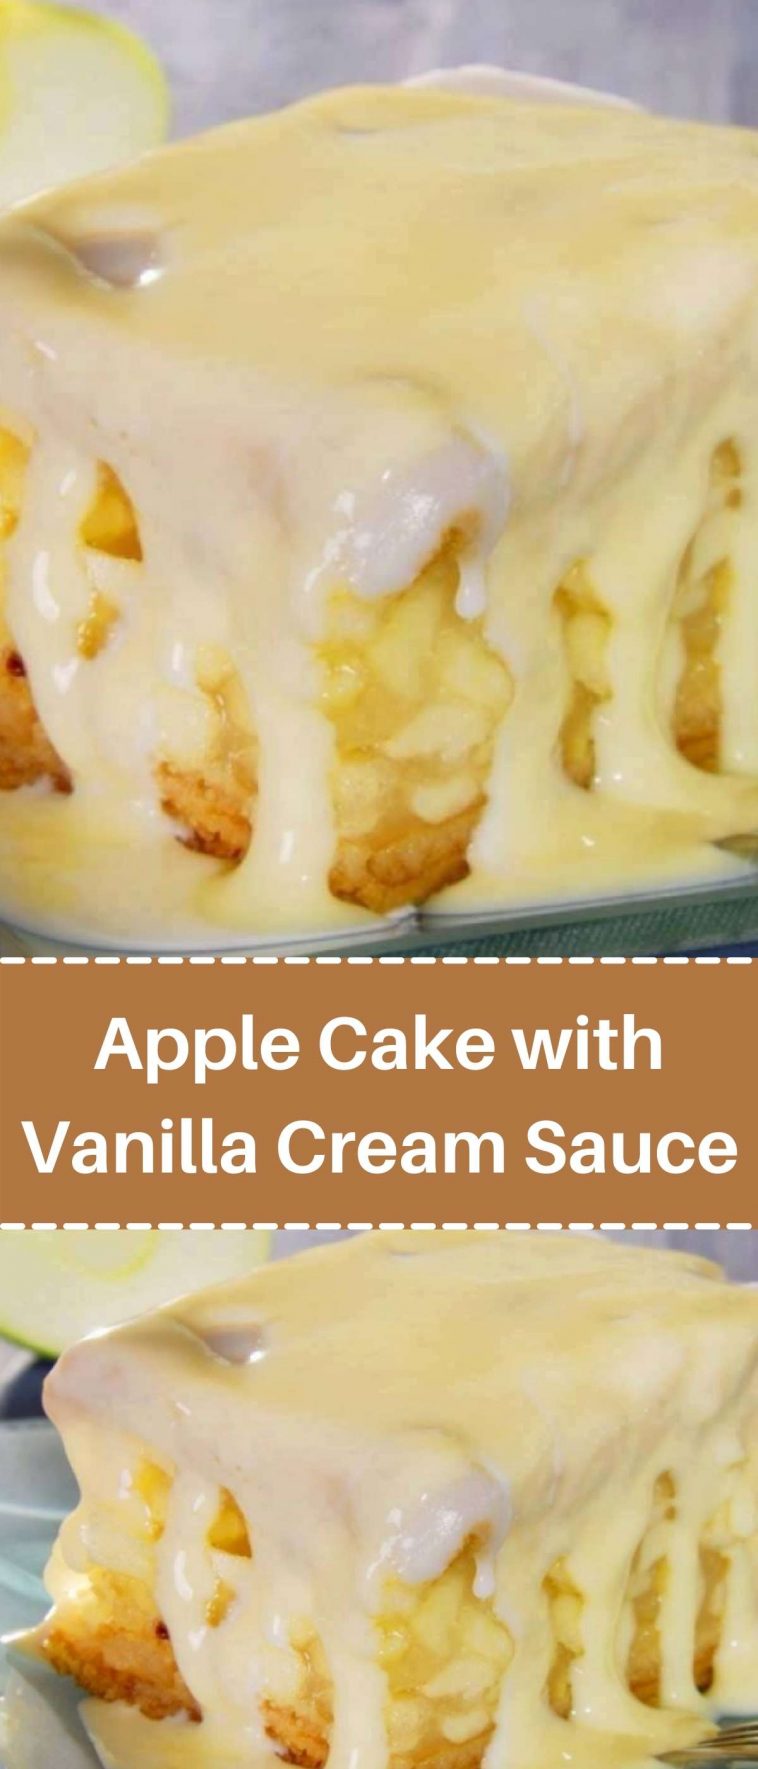 Apple Cake with Vanilla Cream Sauce